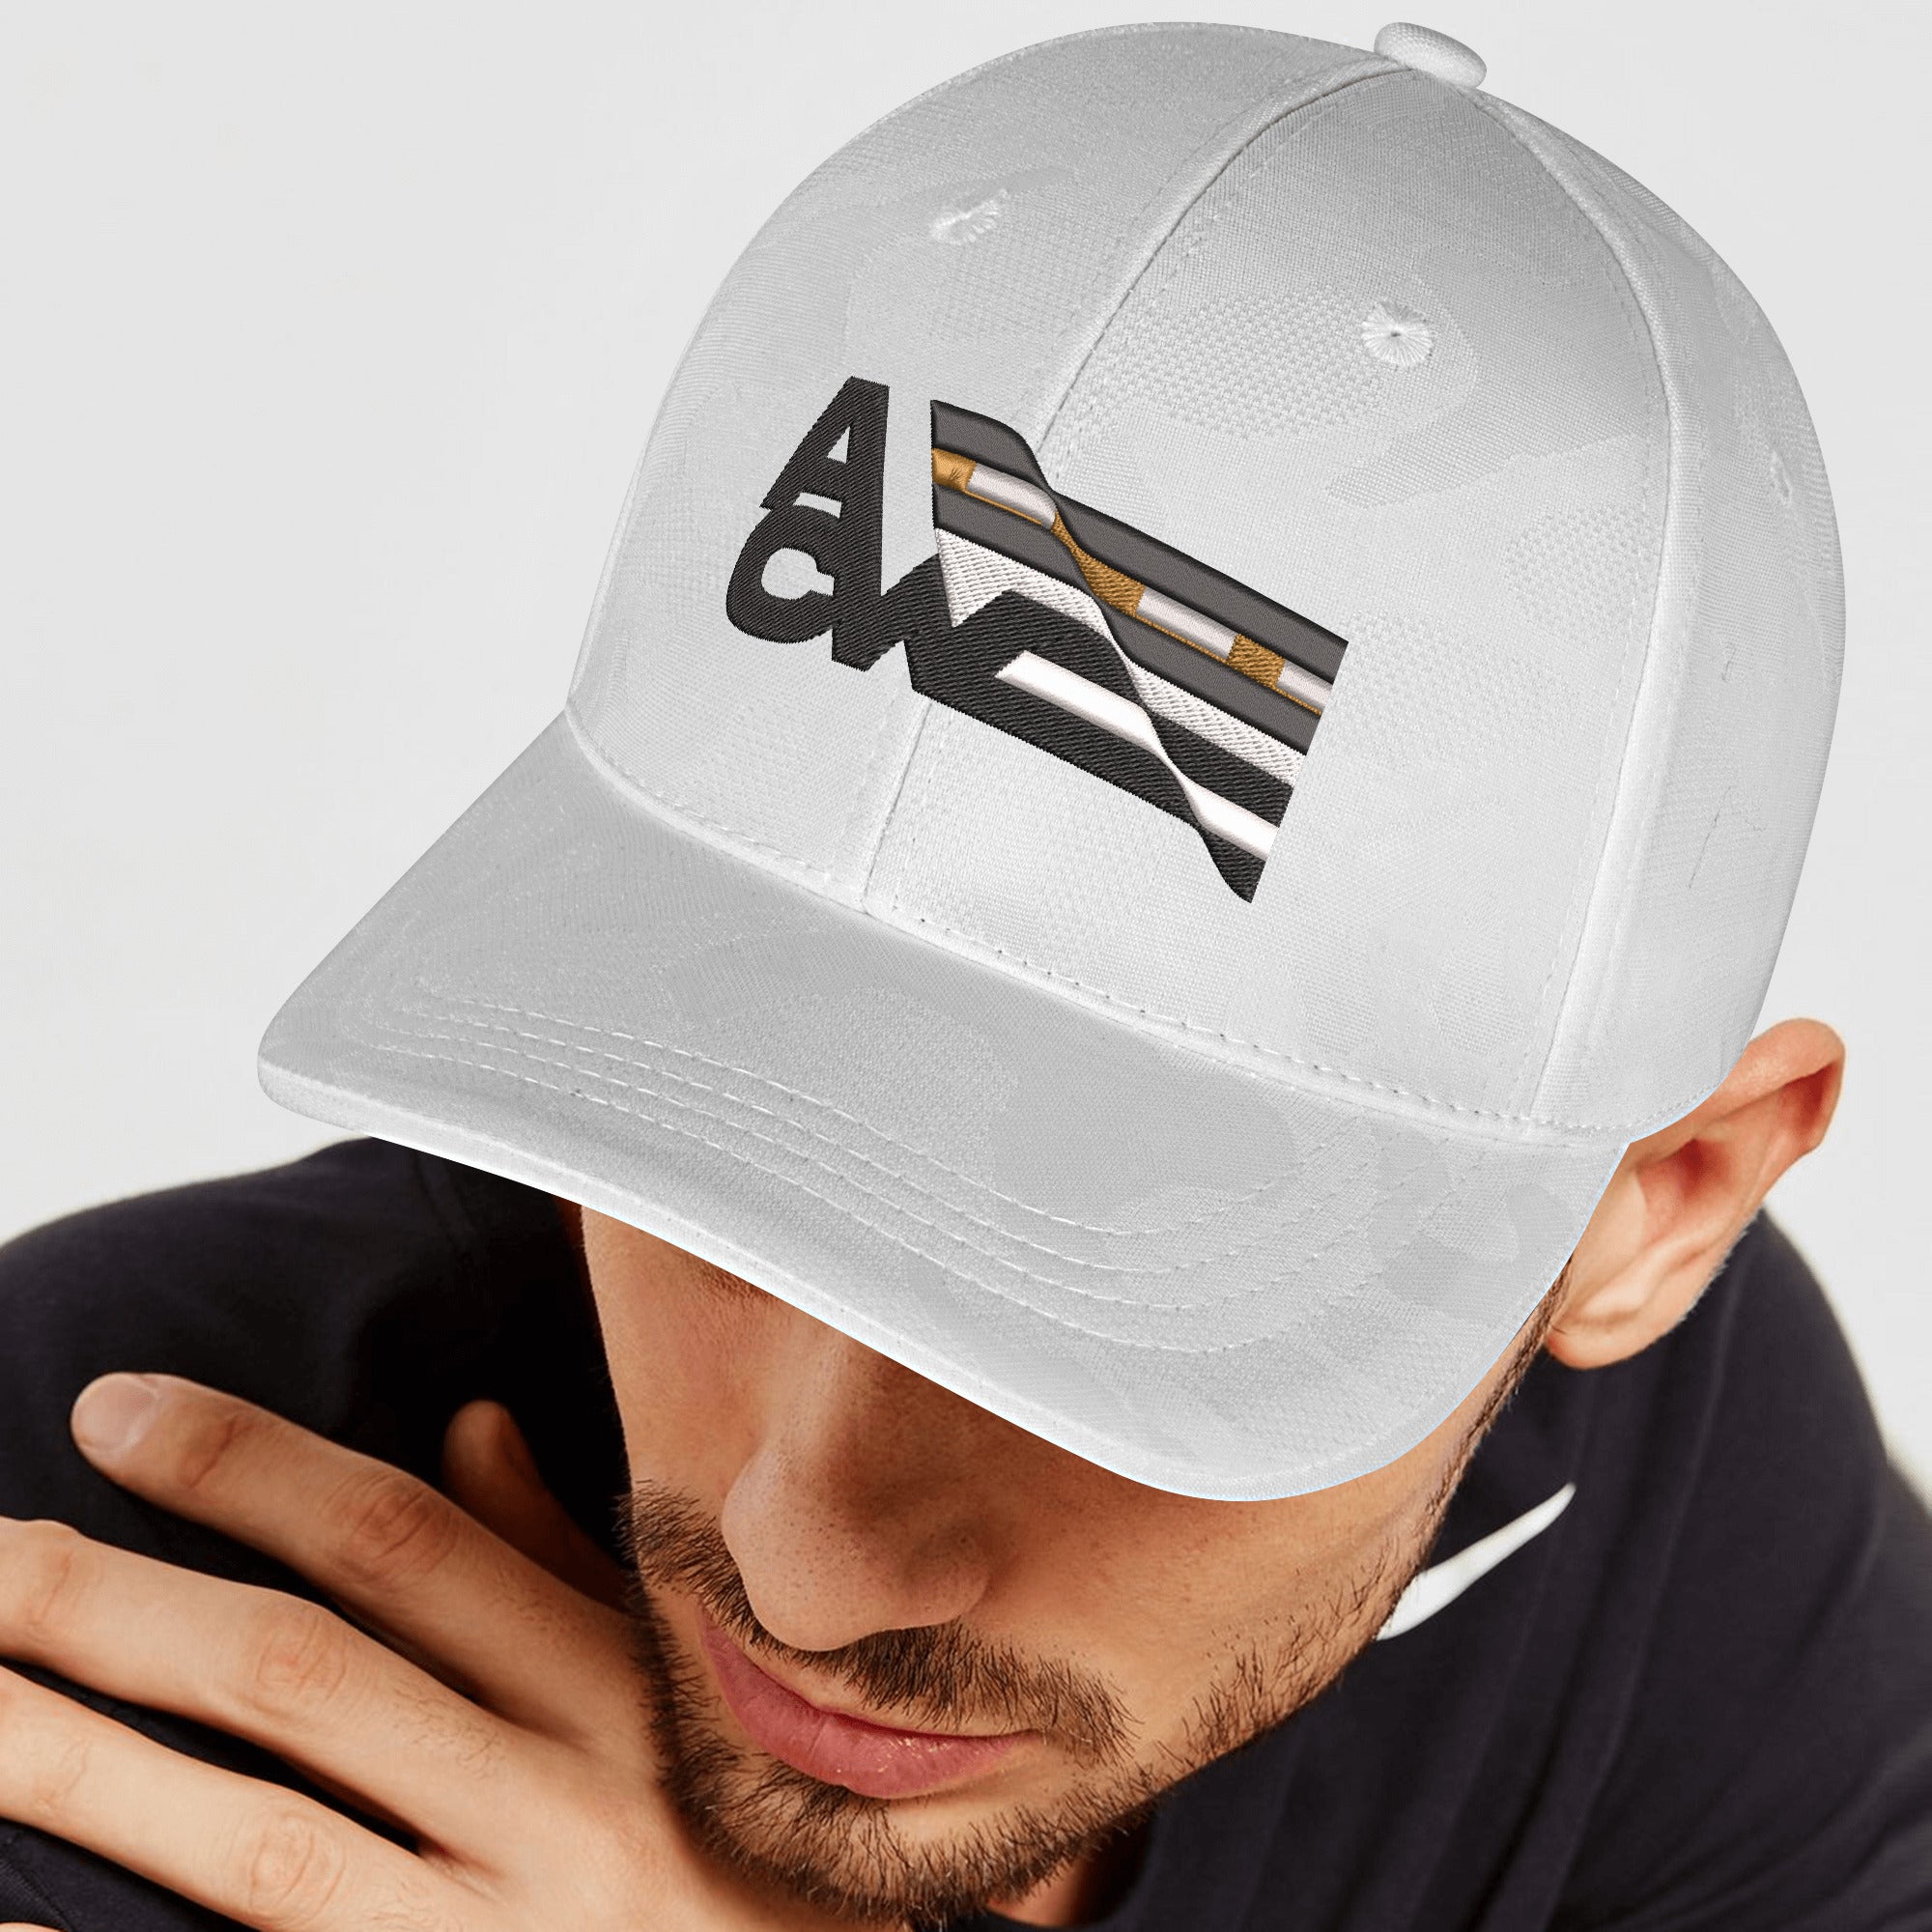 ACW Flag Embroidered Sports Camo Caps